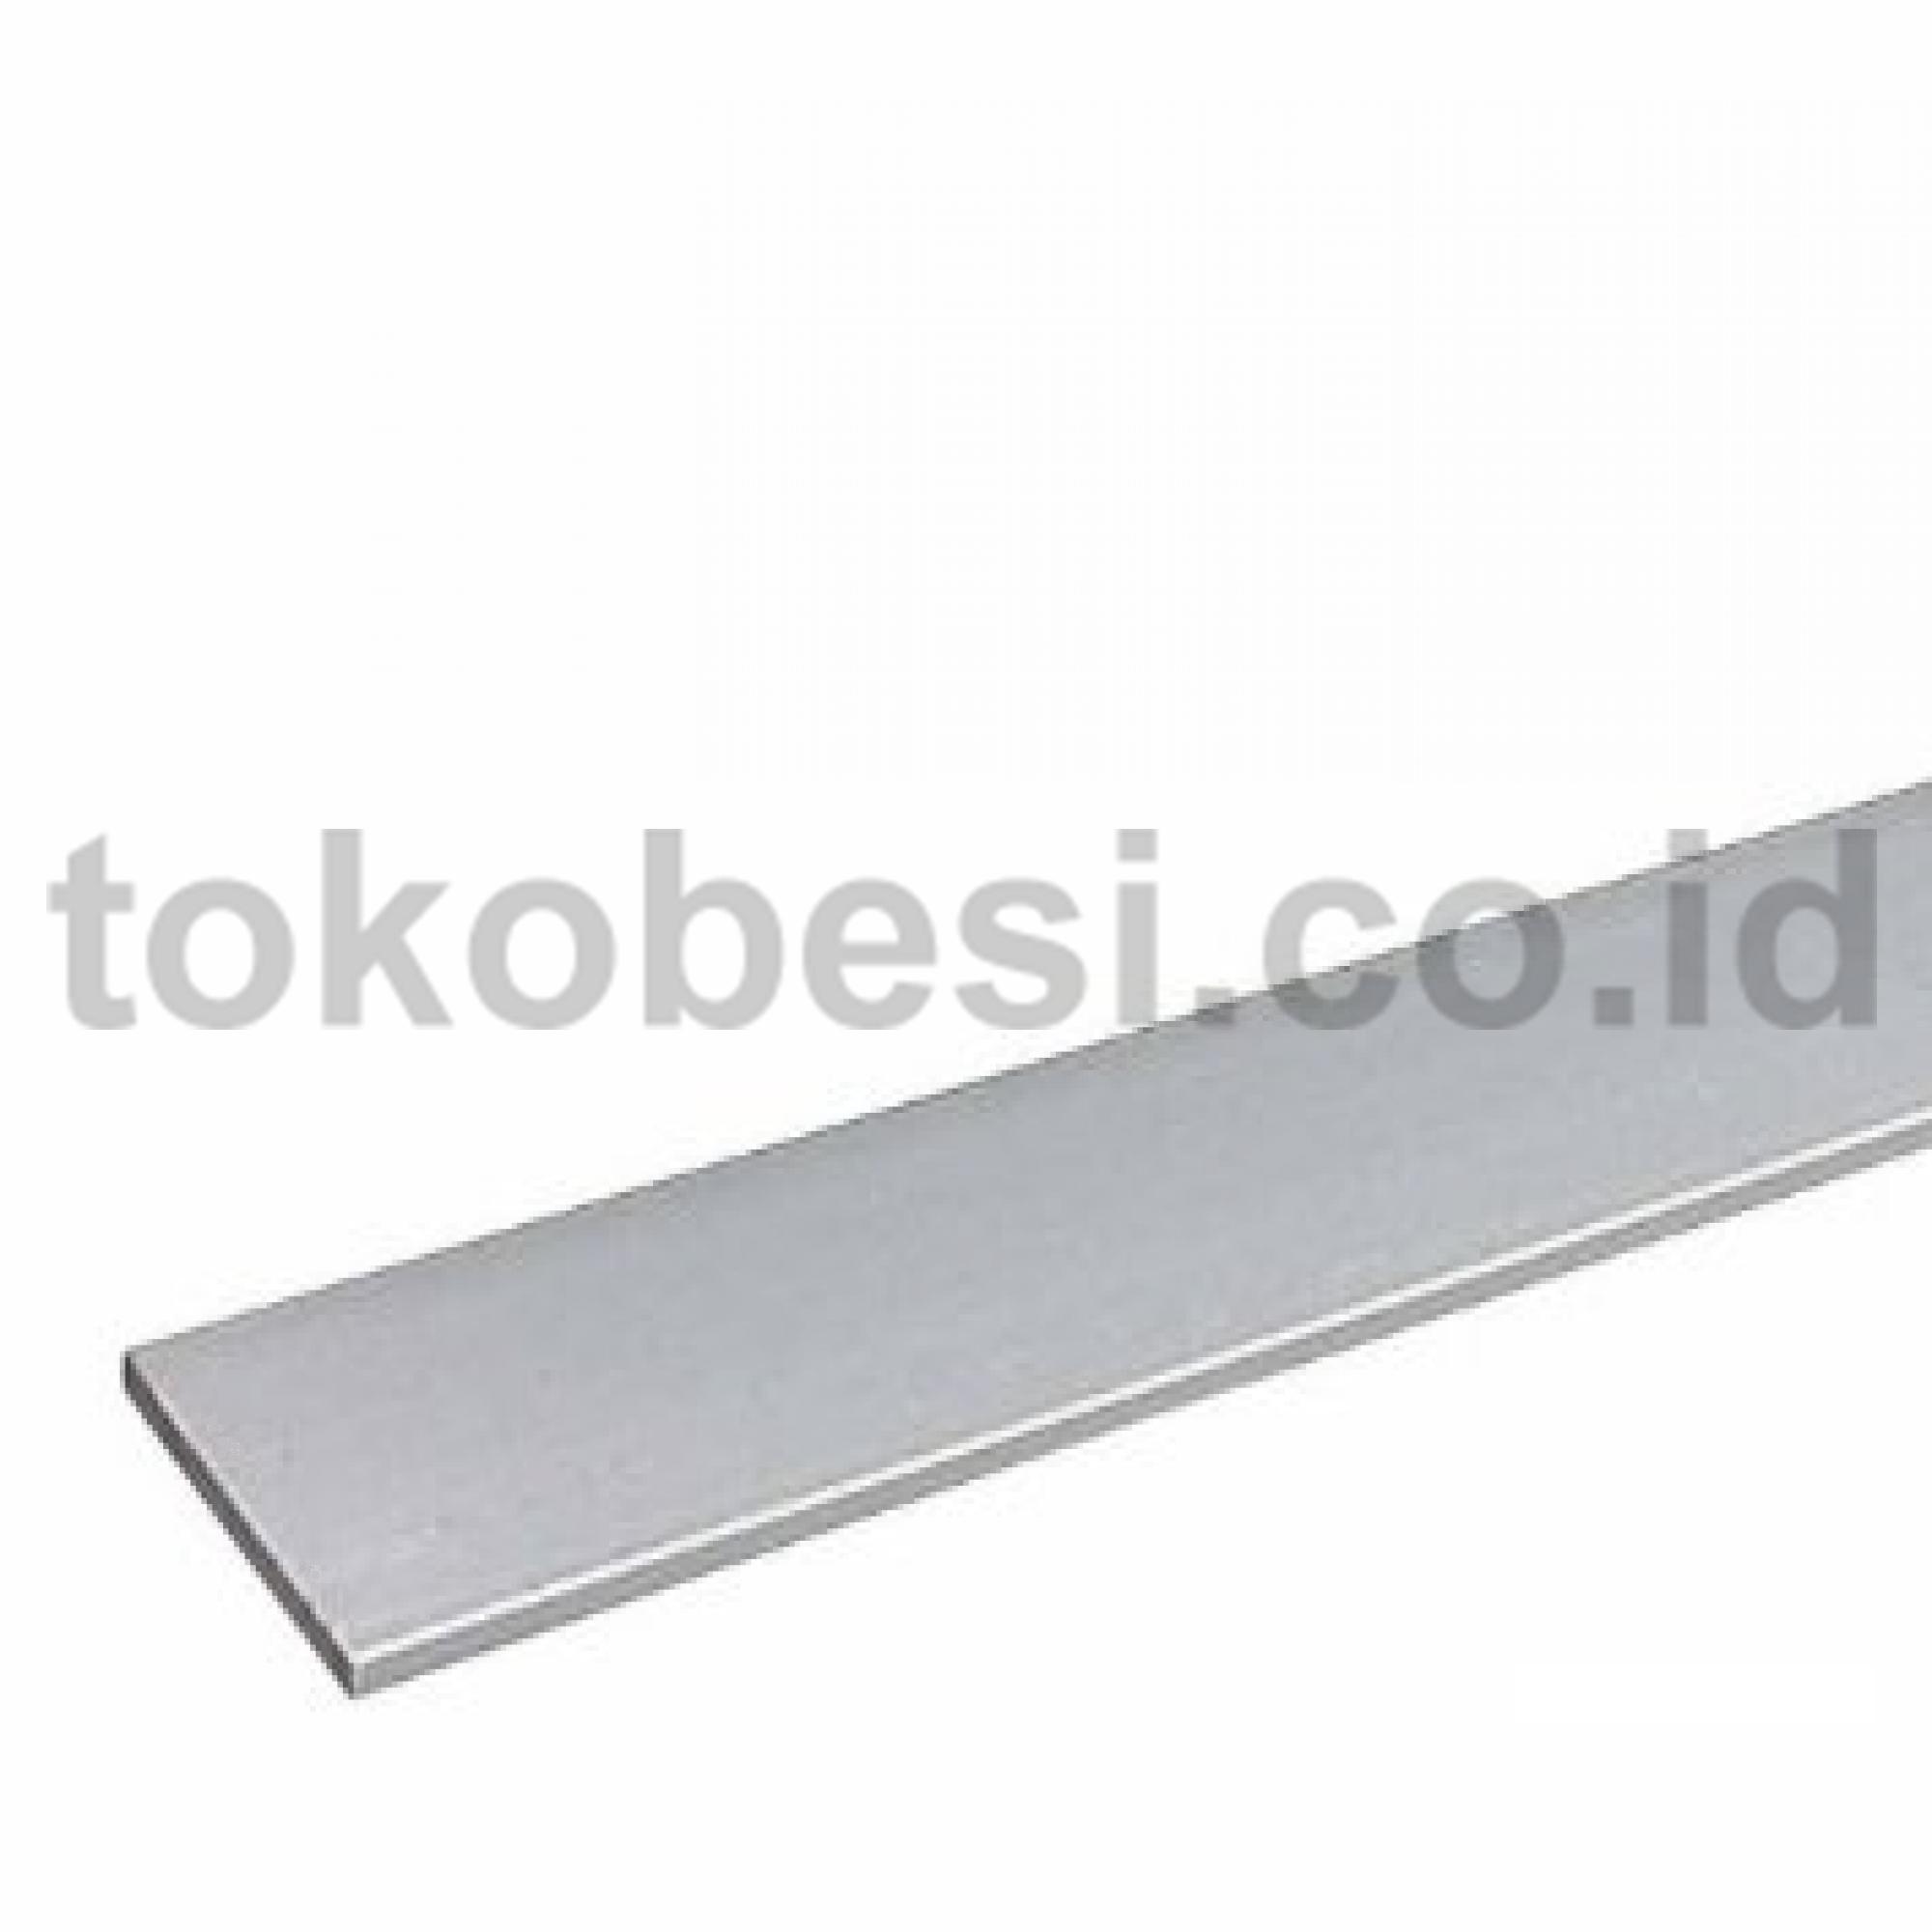 Strip Stainless Steel 201 ≠ 12 x 40 x 6000 mm